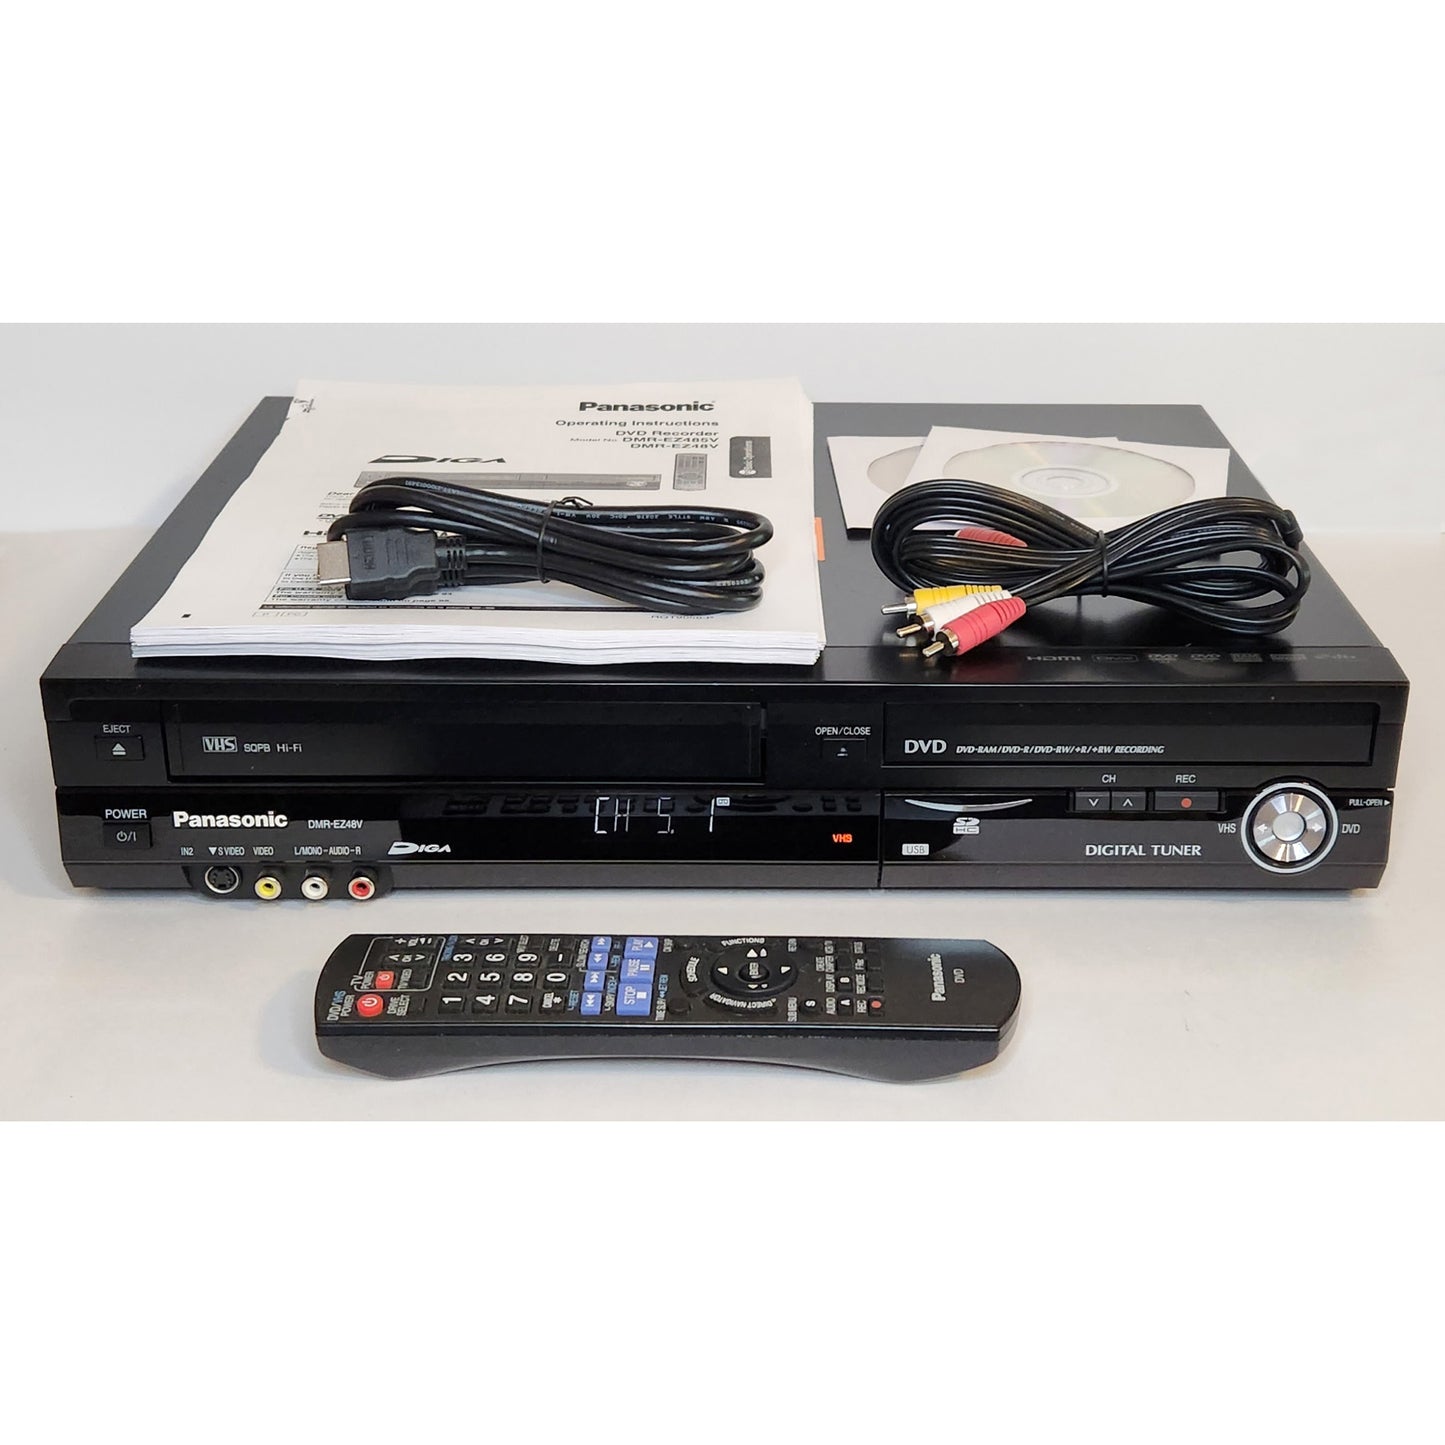 Panasonic DMR-EZ48V VCR/DVD Recorder Combo with HDMI, Digital Tuner